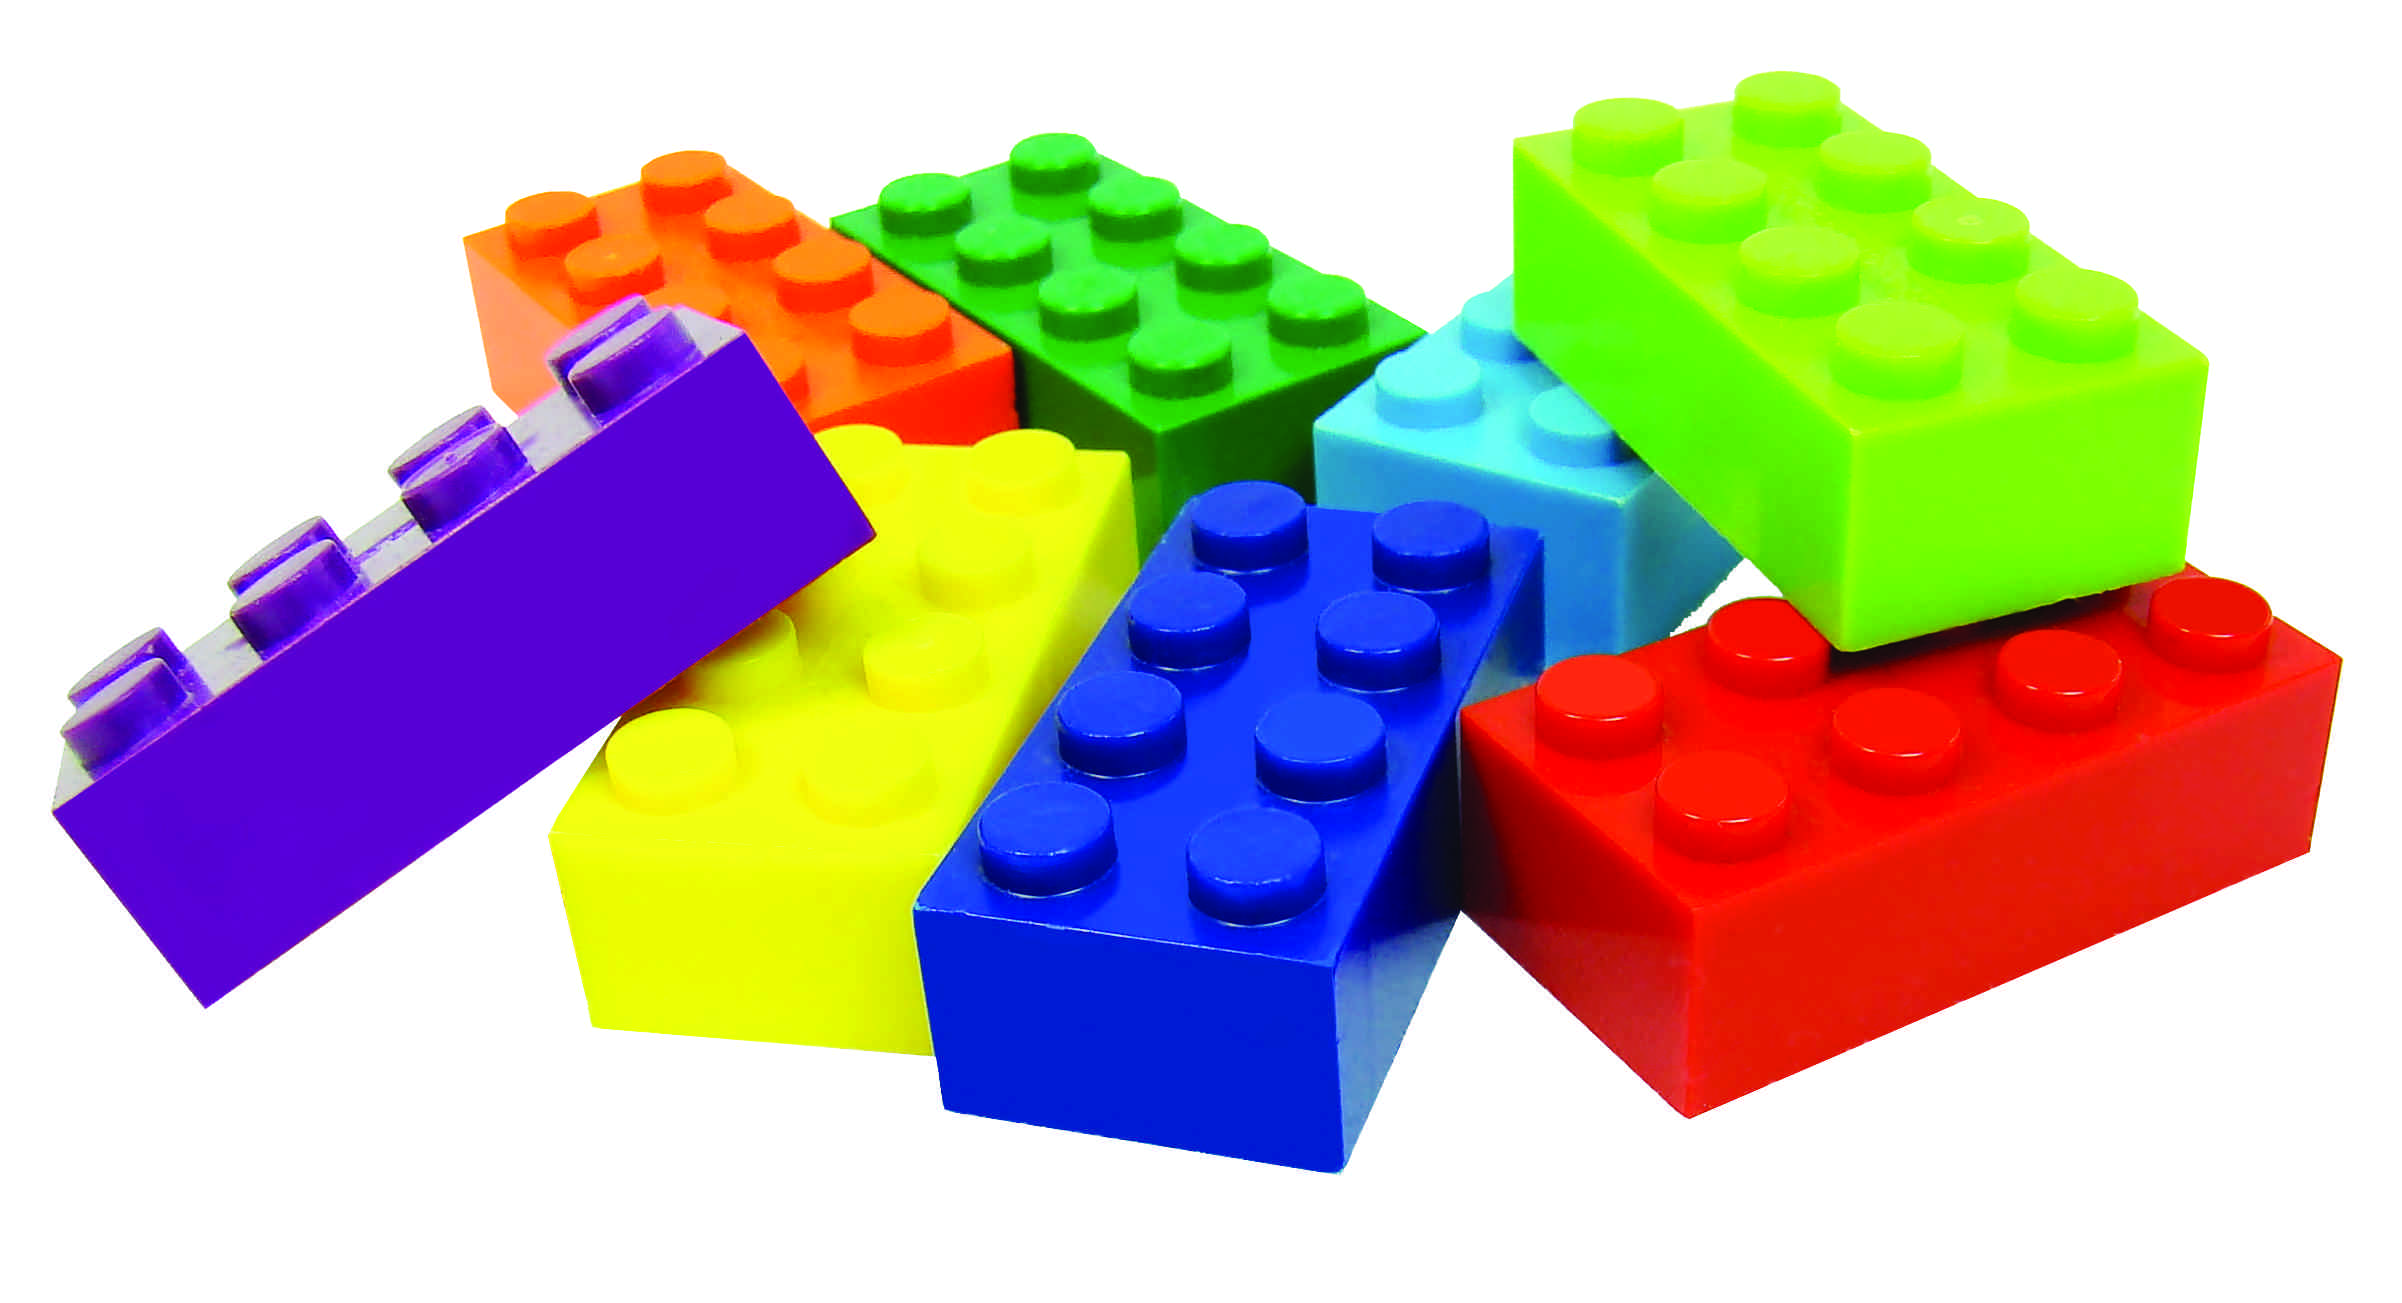 Lego Clip Art - Images, Illustrations, Photos